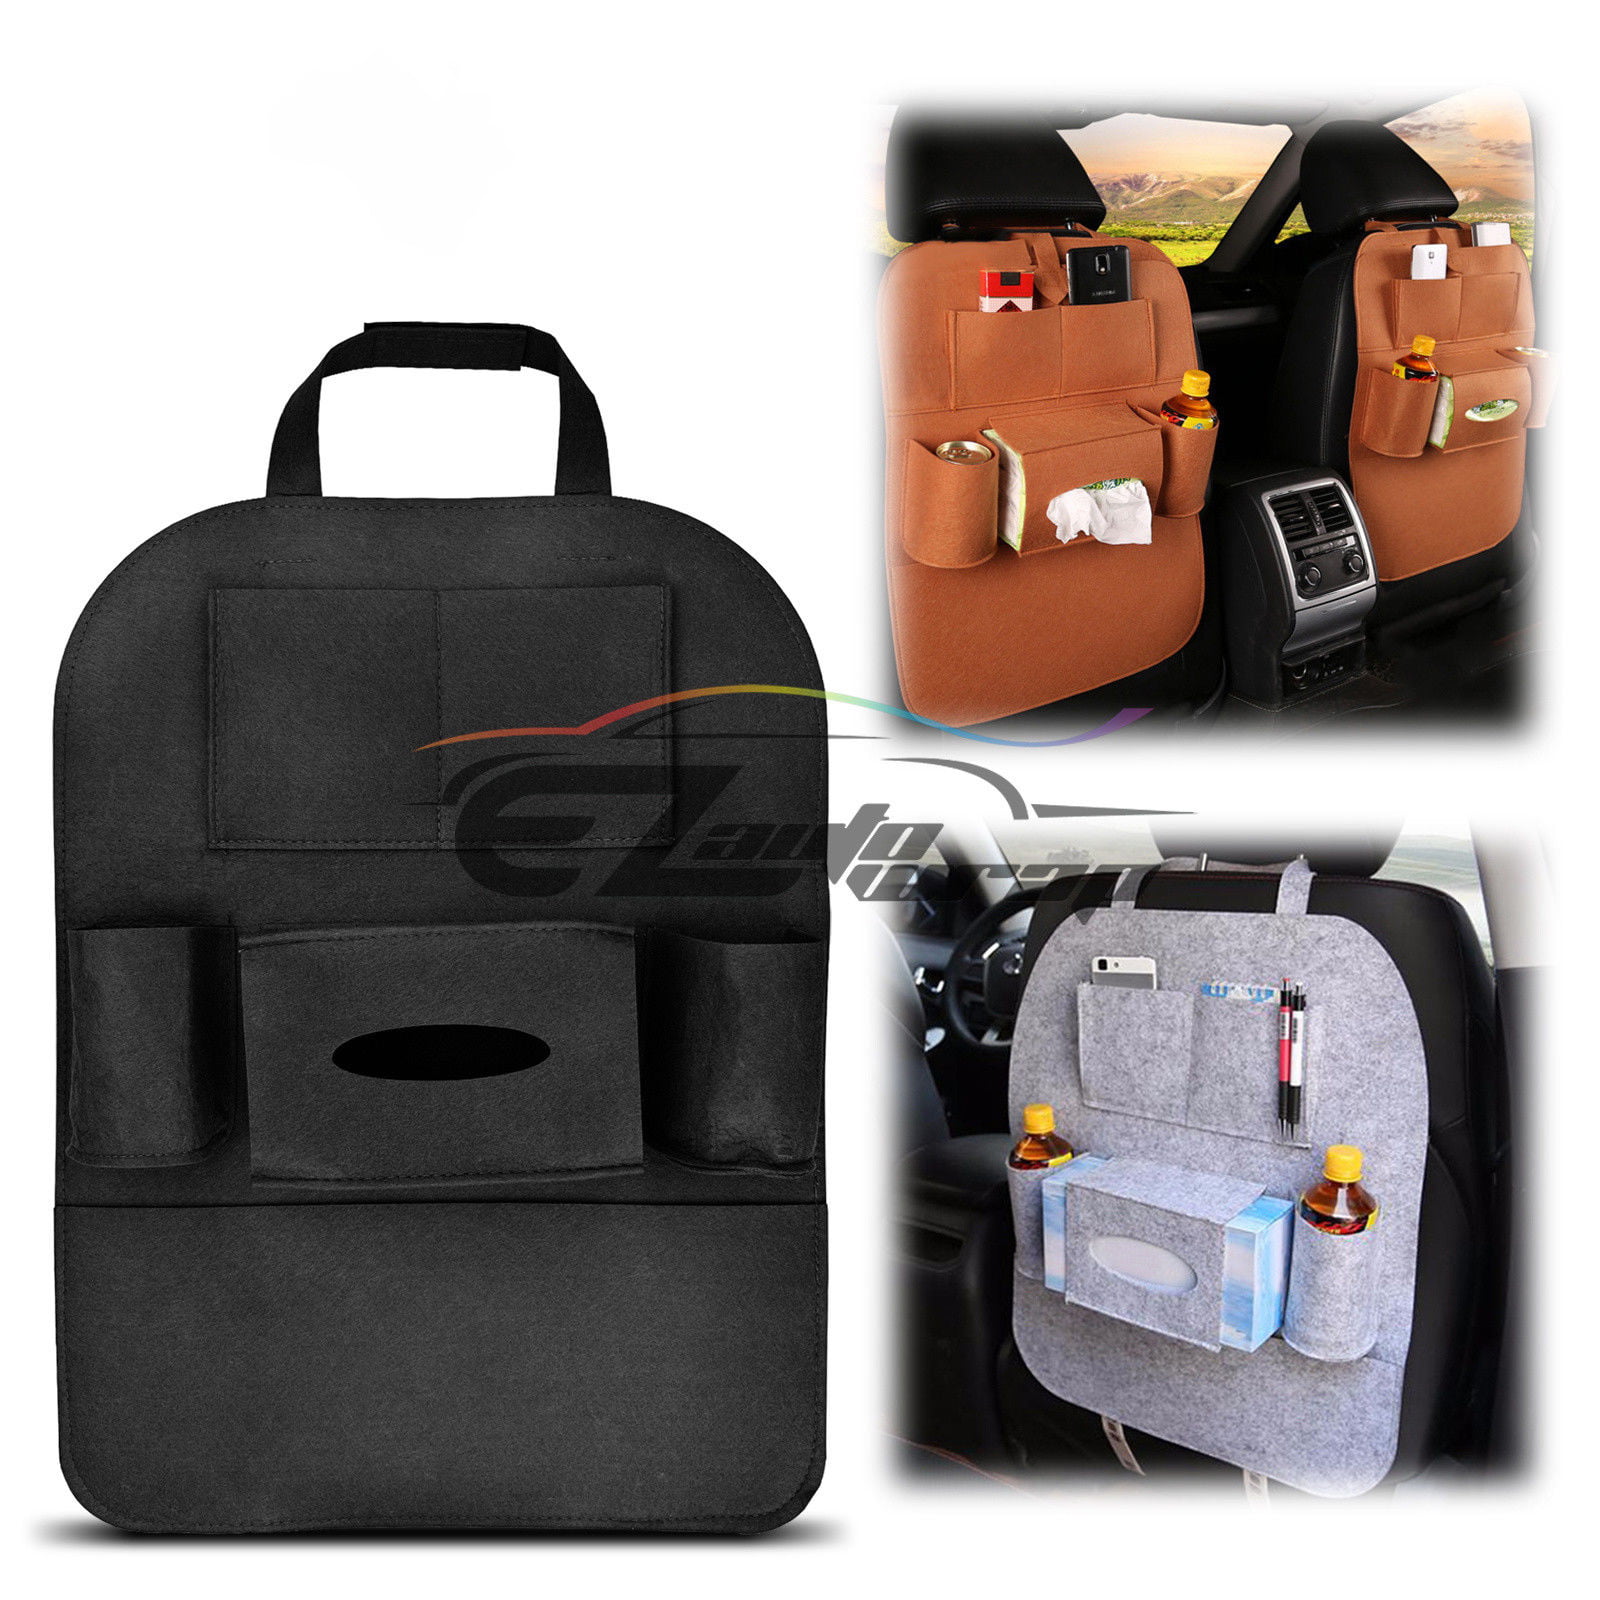 Car Seat Back Bag Organizer Storage iPad Phone Holder Multi Pocket Leather Cool 